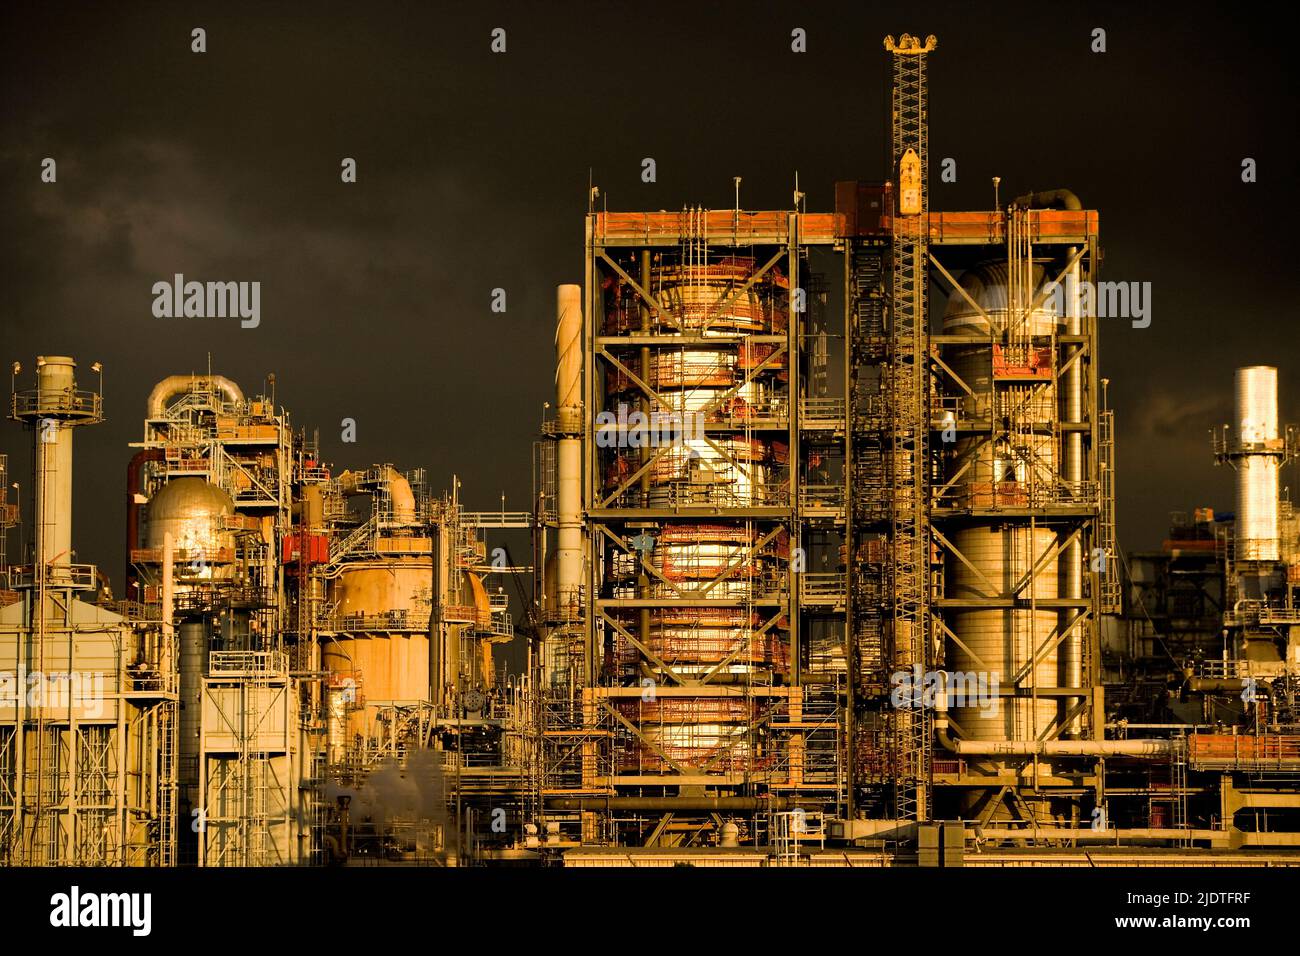 USA, California, Longbeach, Oil refinery at dusk Stock Photo